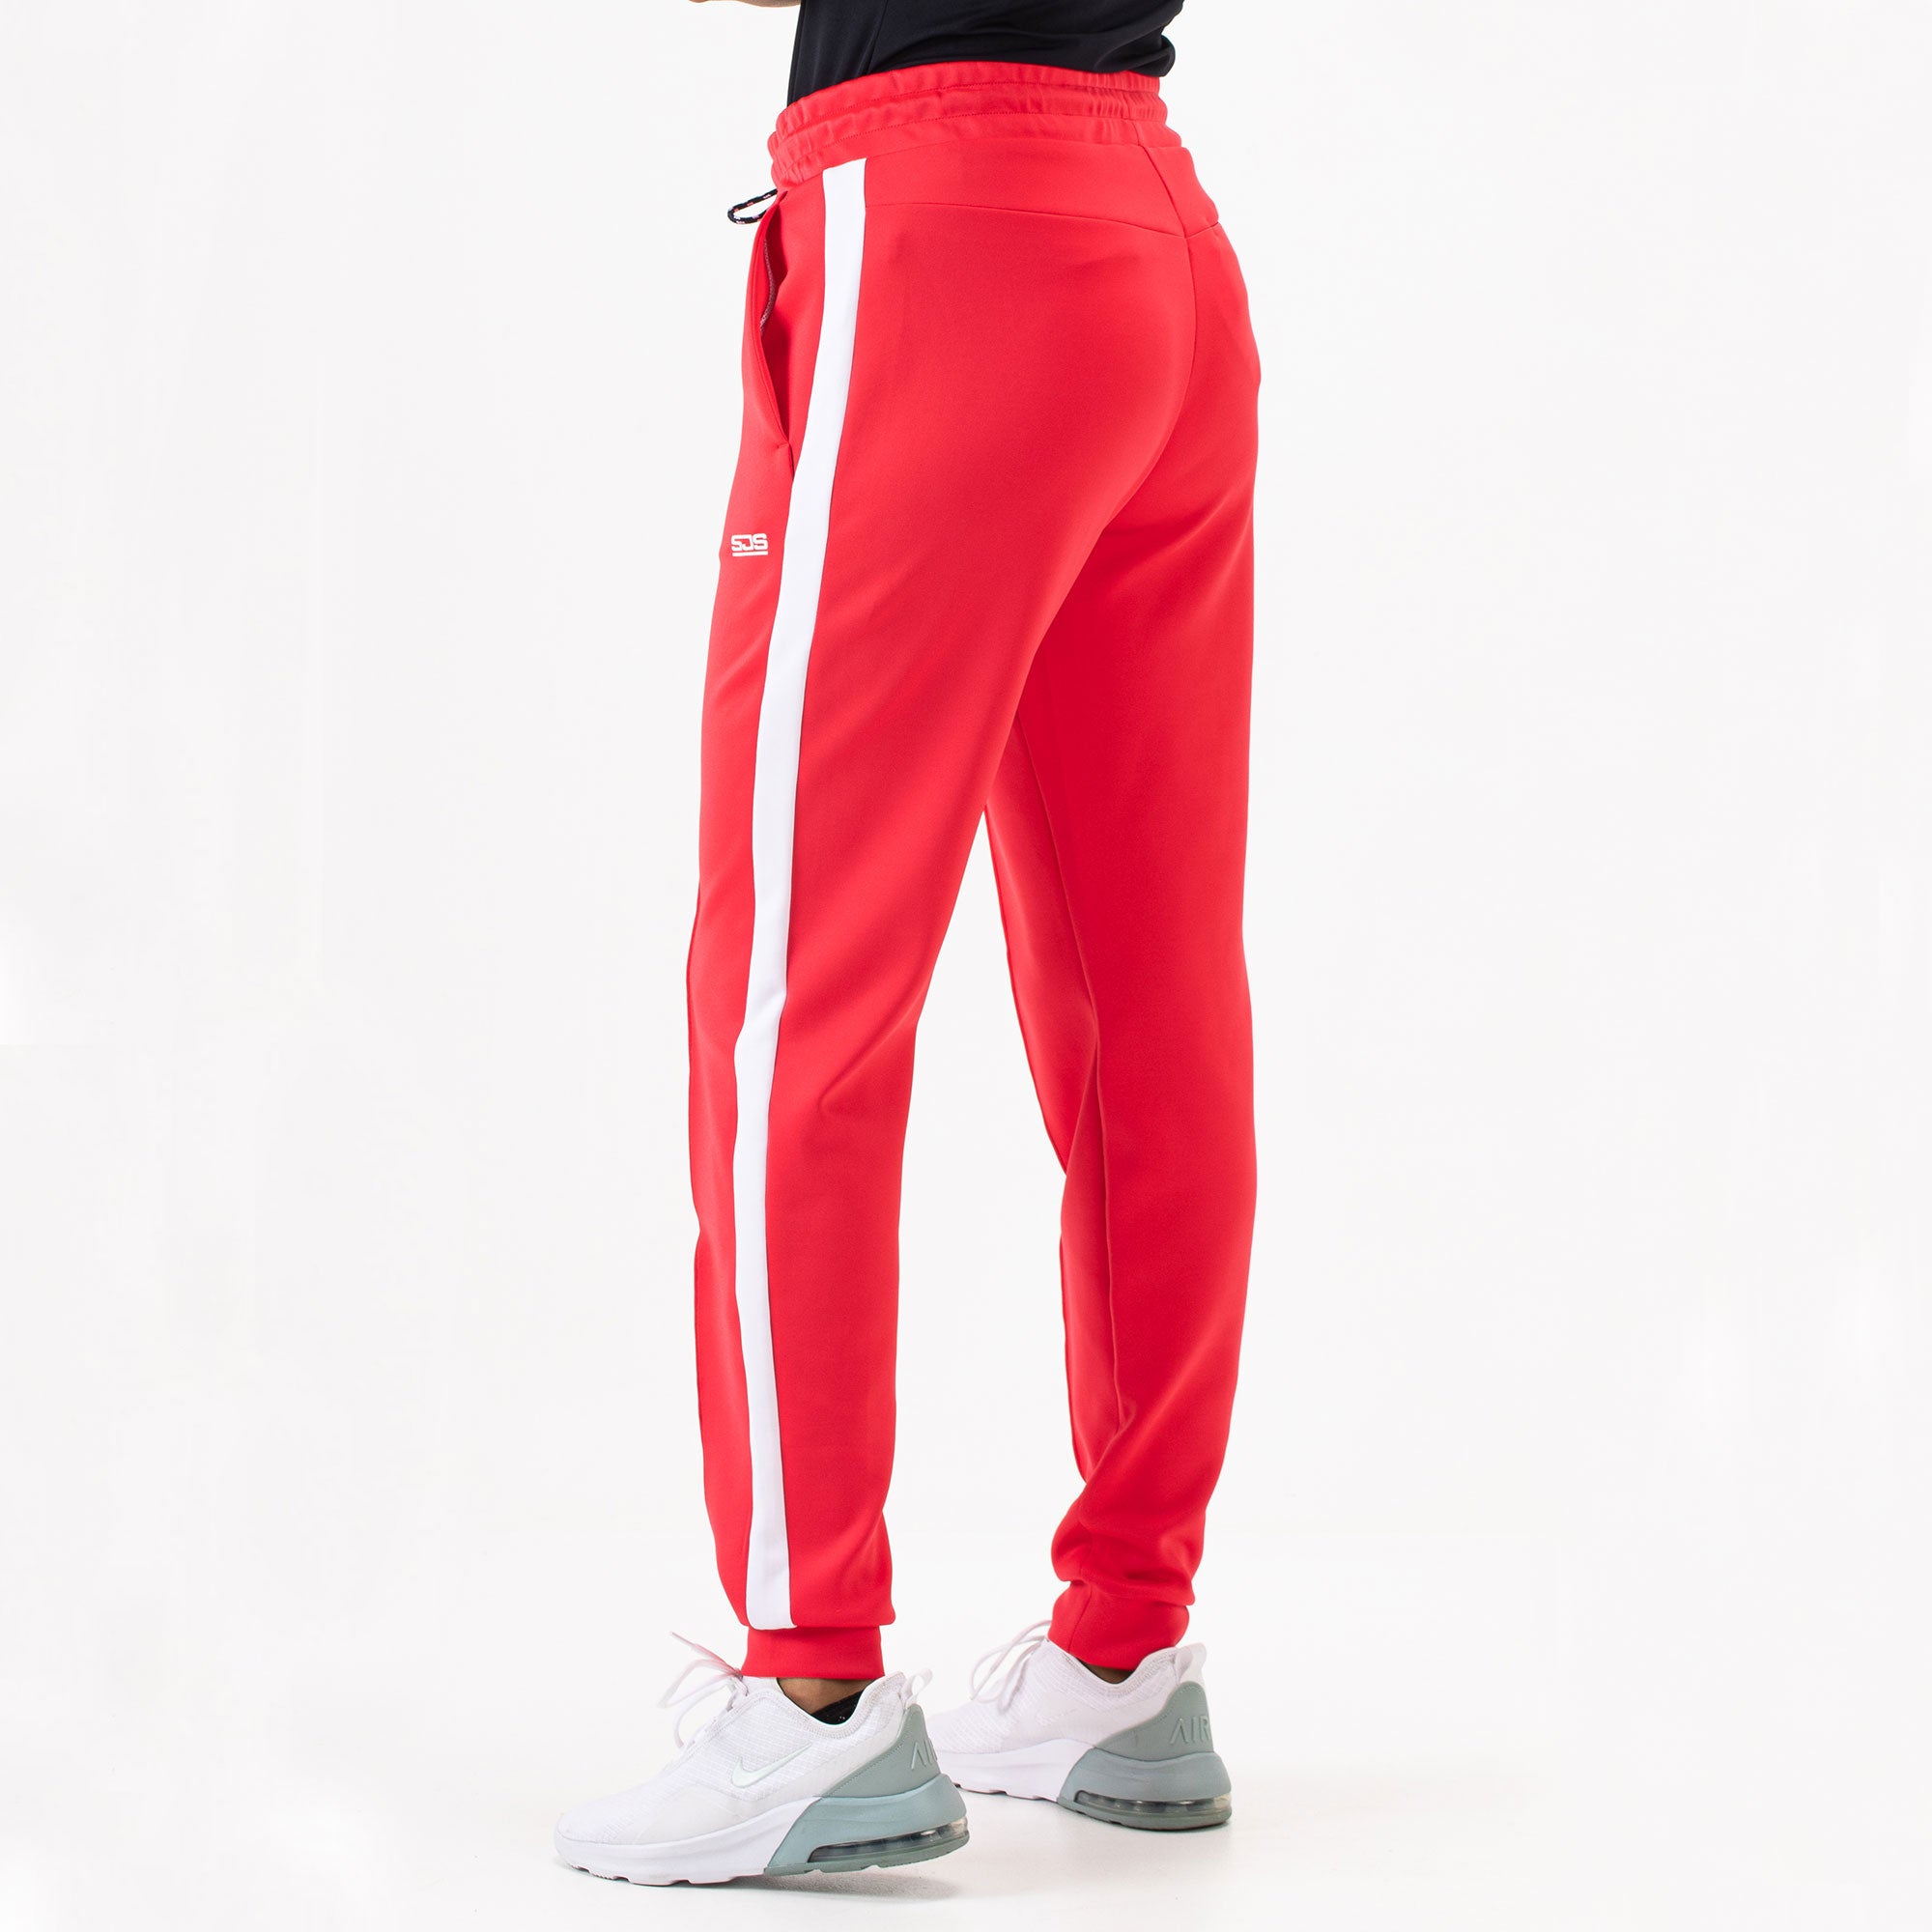 Sjeng Sports Kensi Women's Tennis Pants - Red (2)